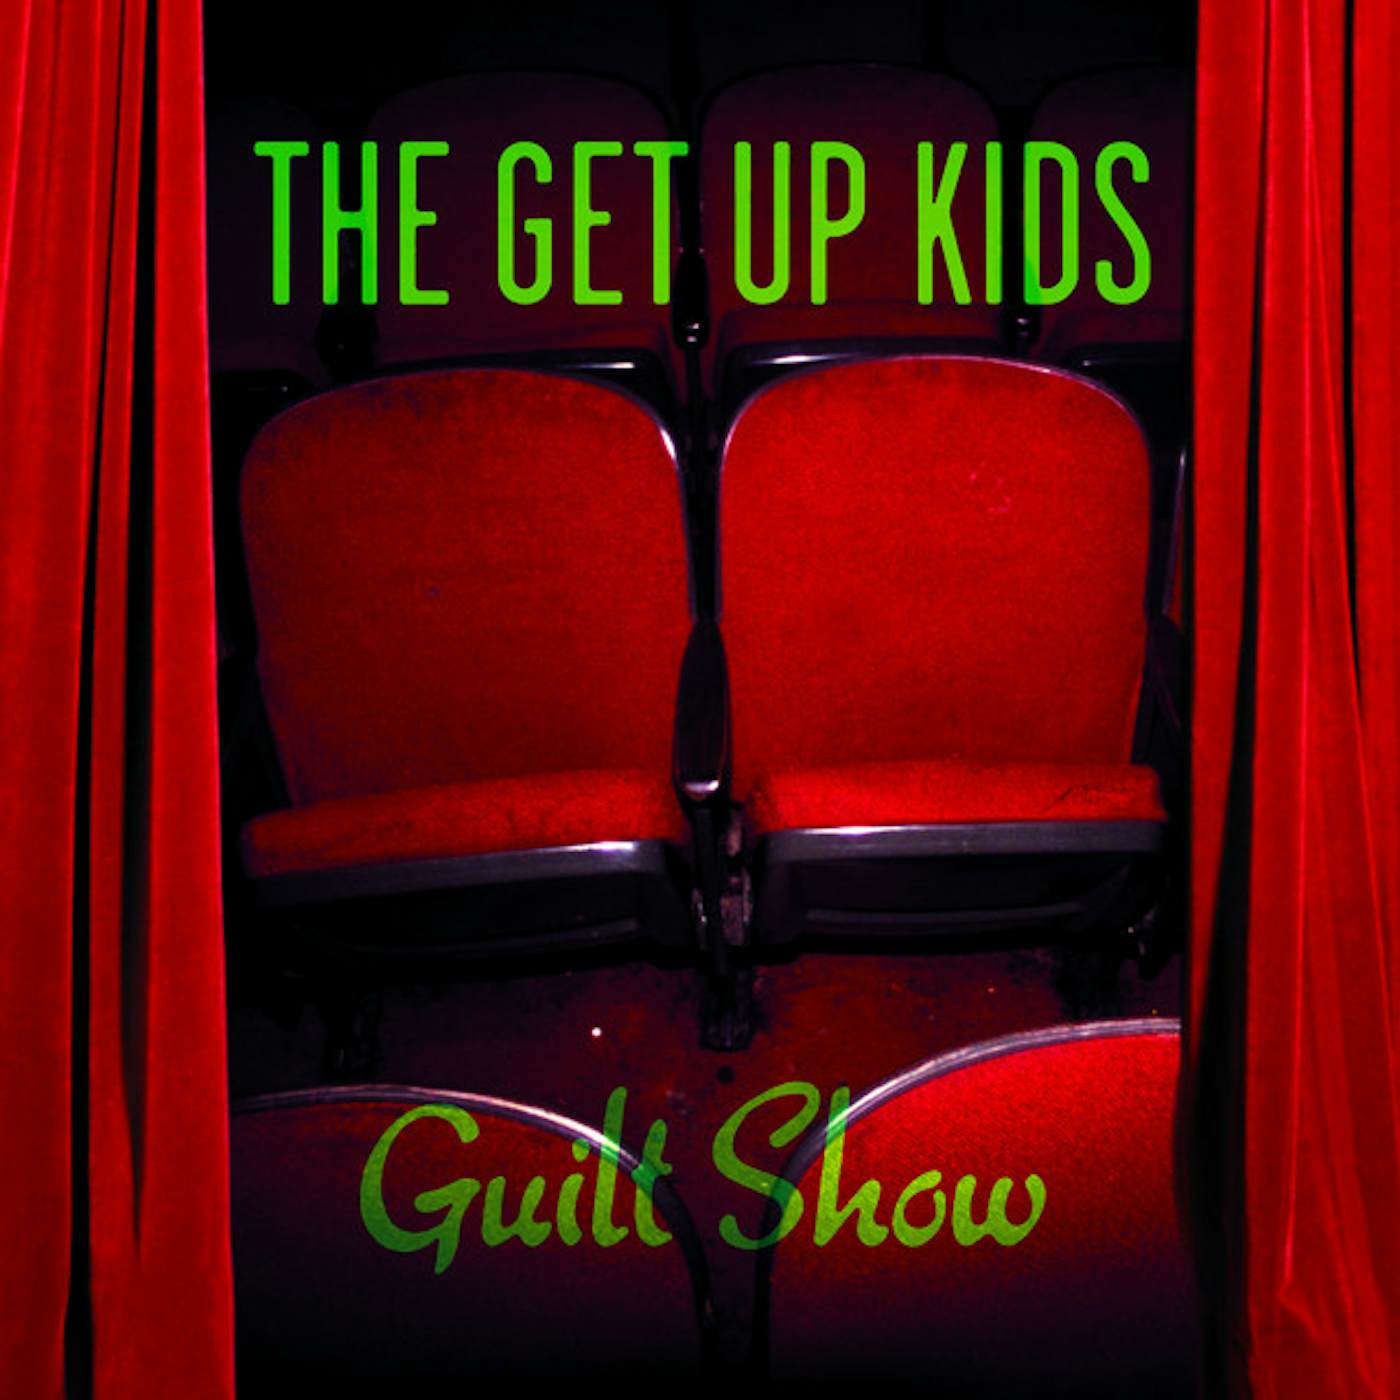 The Get Up Kids Guilt Show Vinyl Record